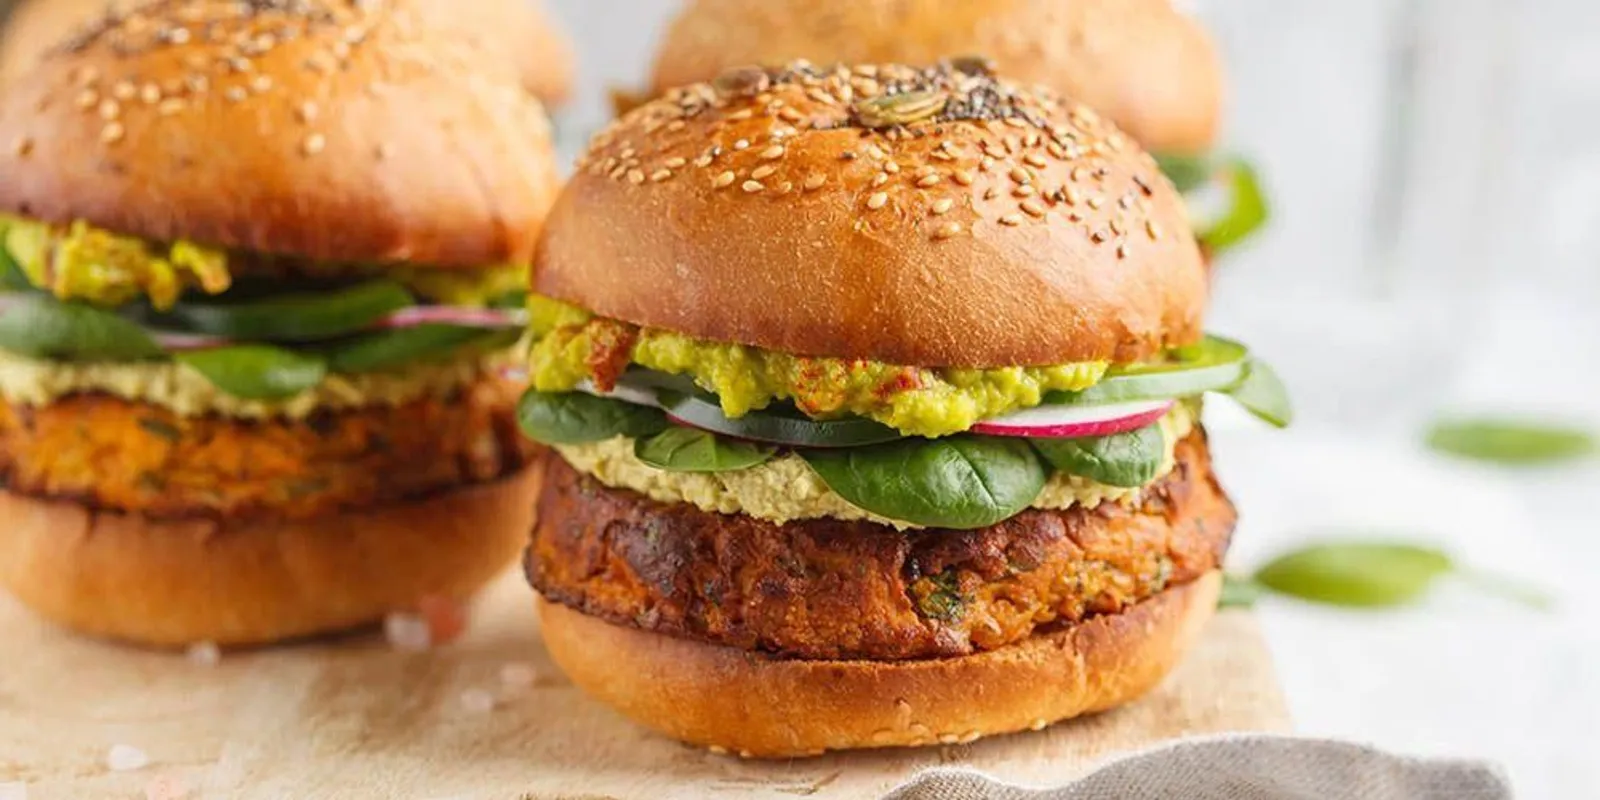 Resep Burger Ayam Homemade, Hidangan Rendah Kalori yang Kaya Gizi